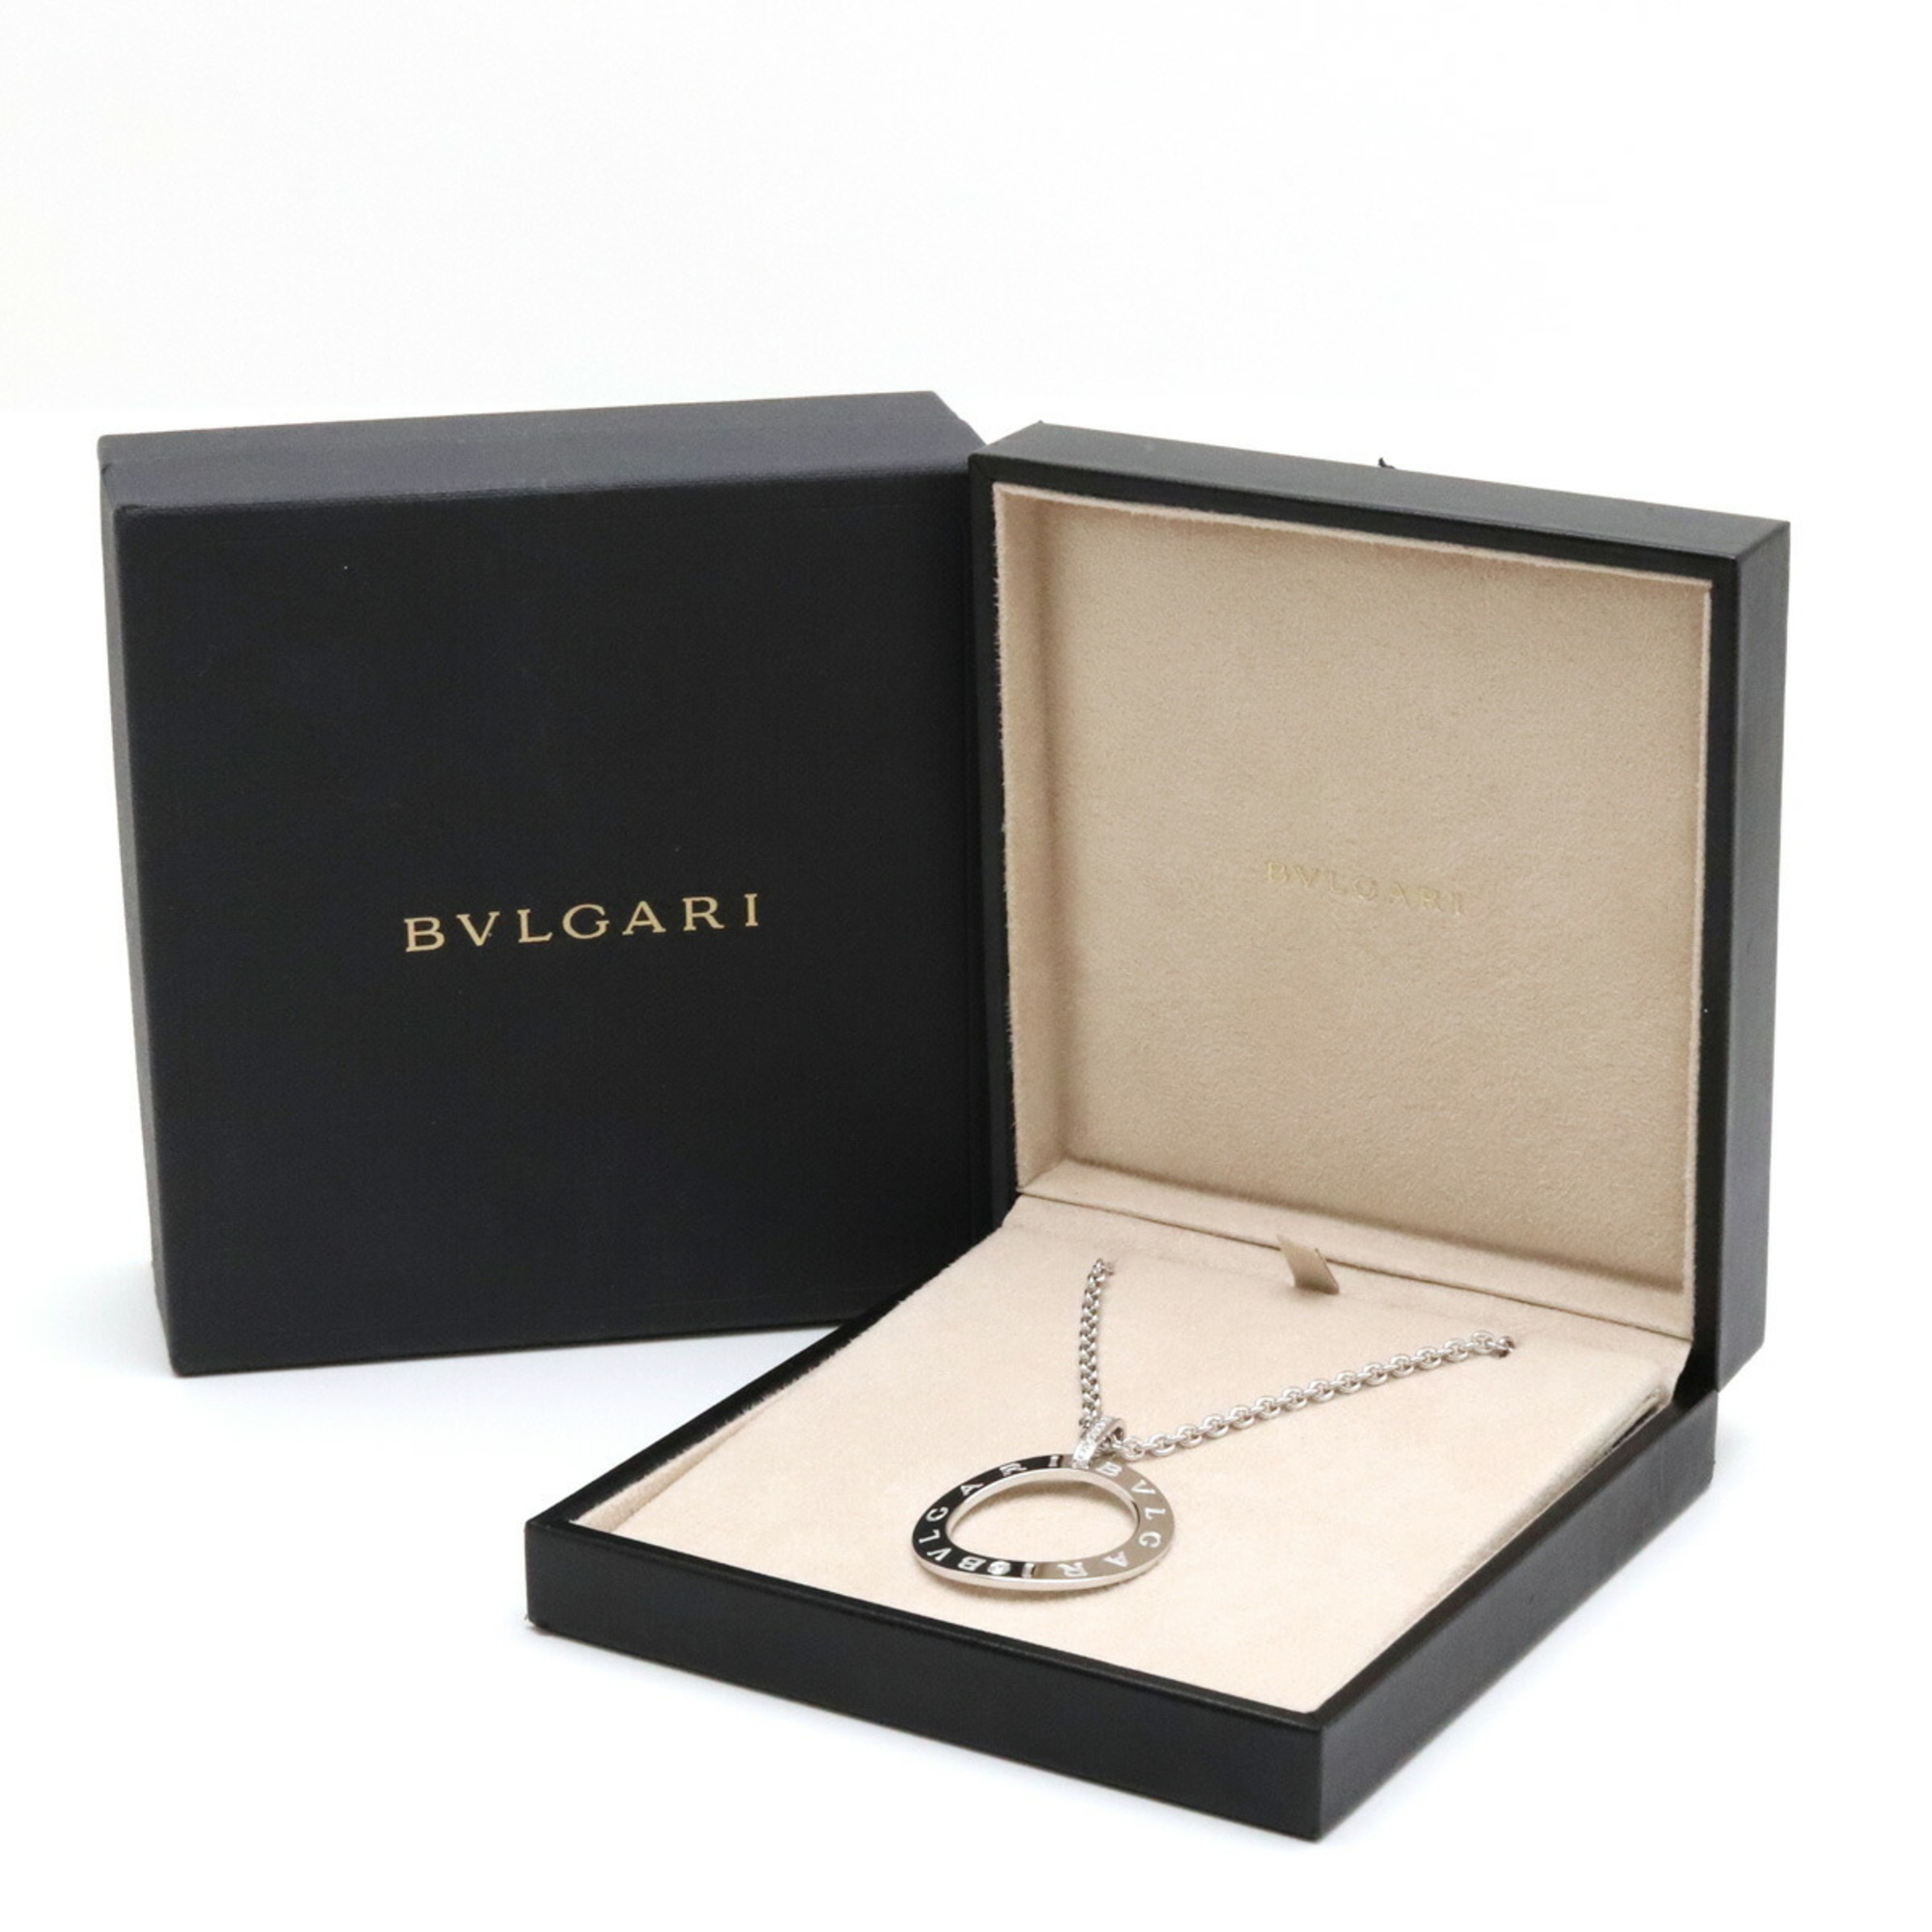 BVLGARI Bulgari Sautoir long necklace pendant K18WG white gold diamond